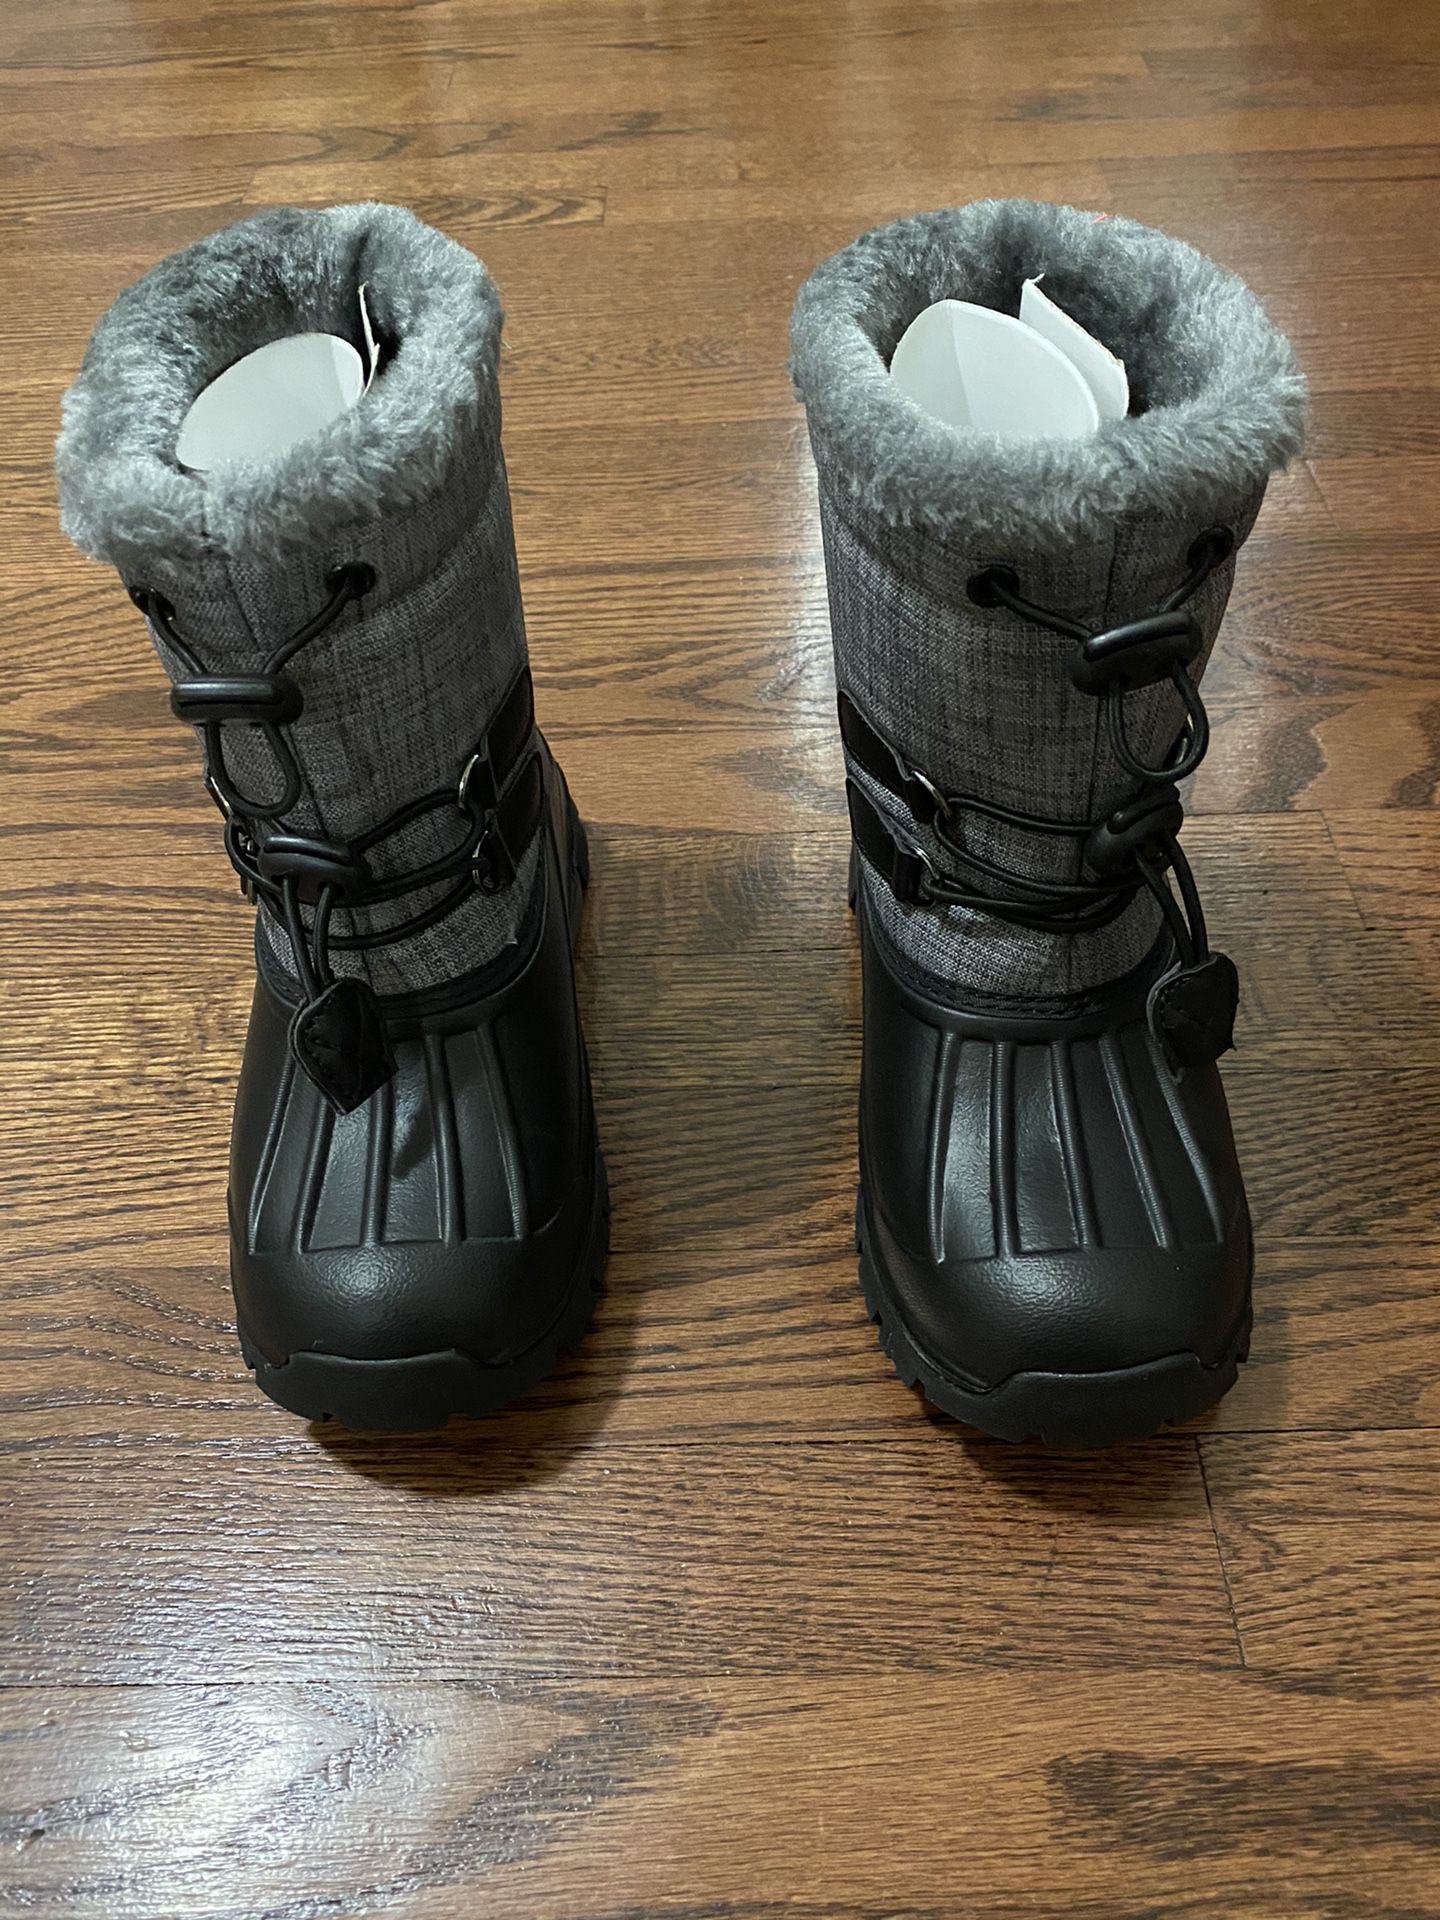 Unisex Snow Boots kids Waterproof